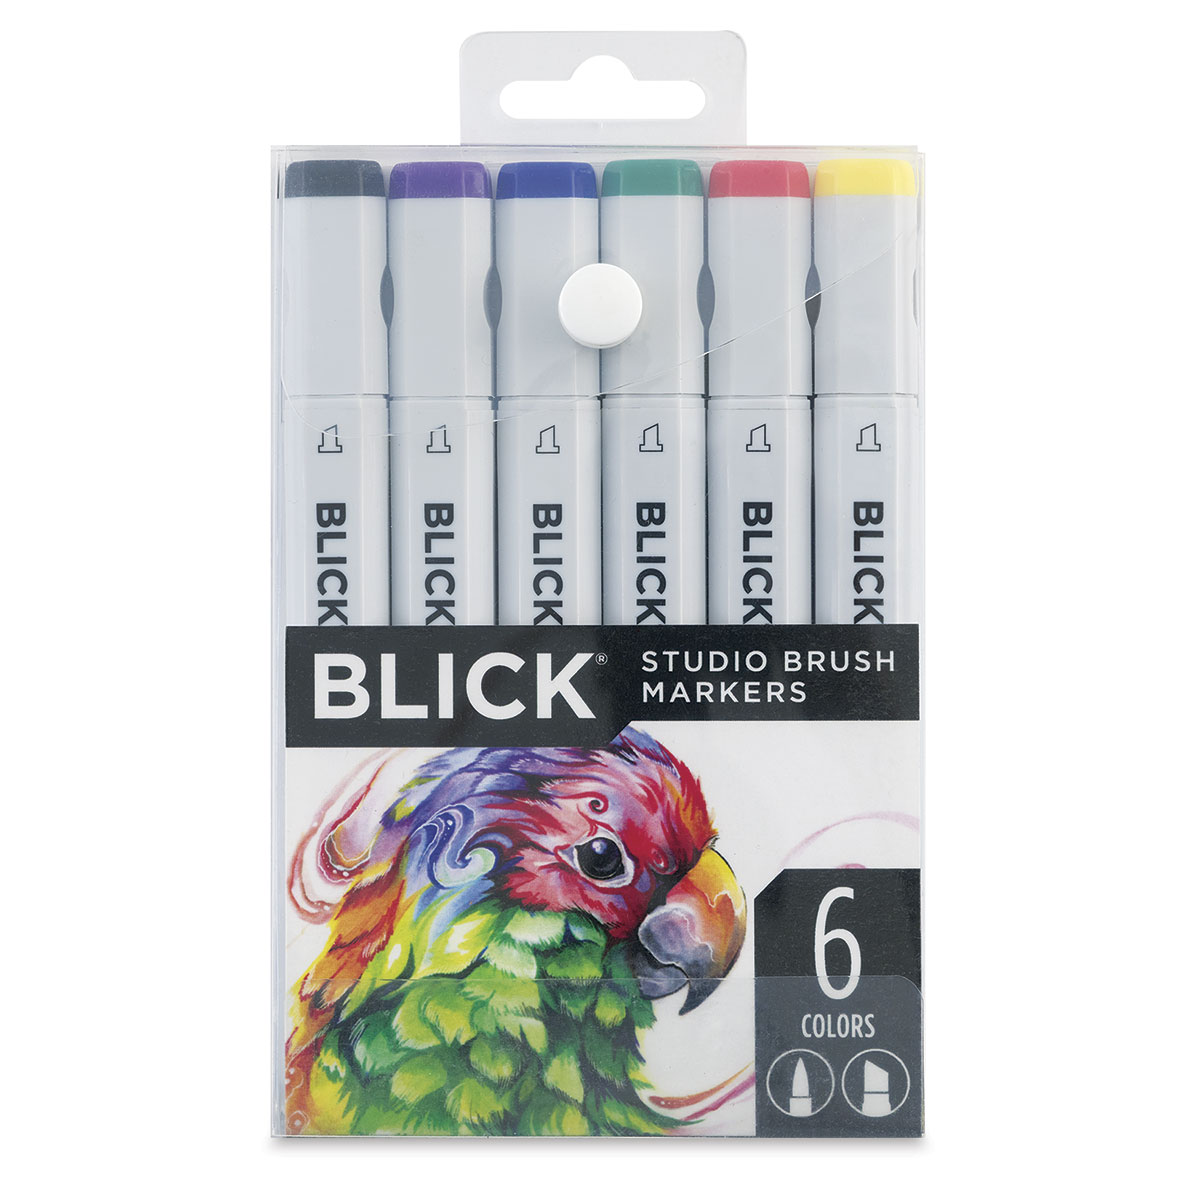 Now your Blick Studio Markers can - Blick Art Materials